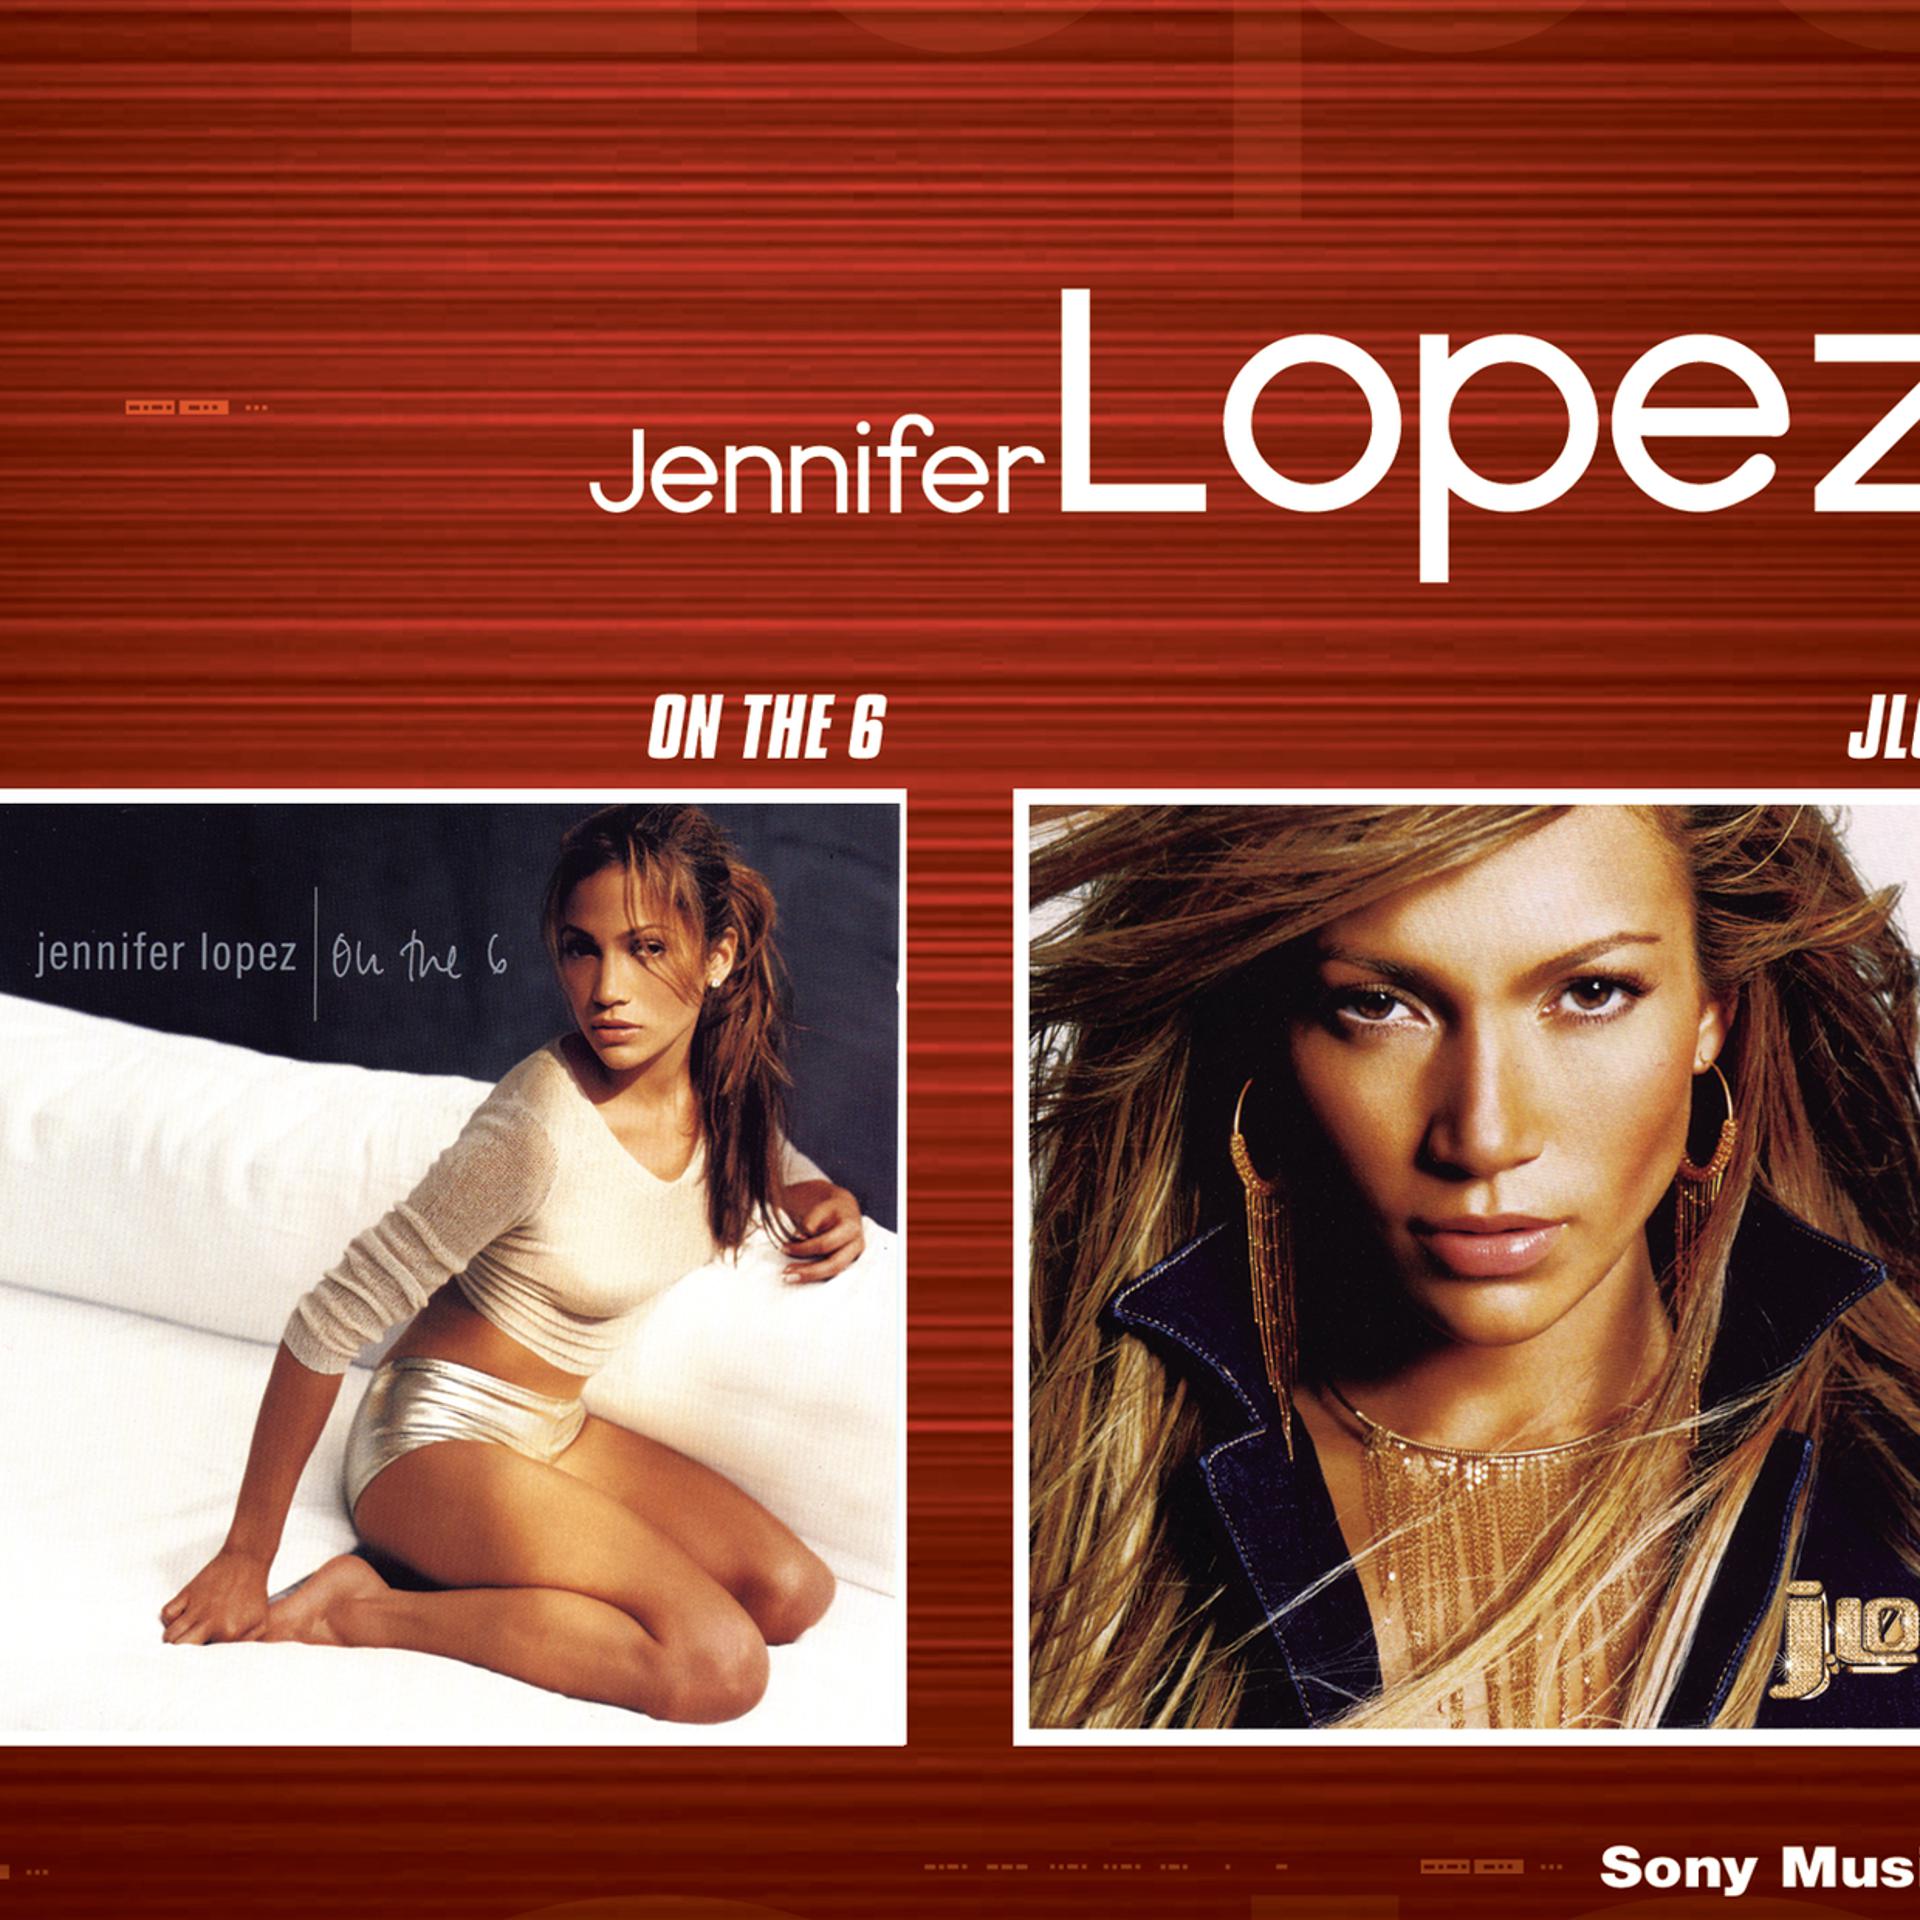 Перевод песен лопес. Jennifer Lopez on the 6 обложка. J.lo альбом 2001. Jennifer Lopez компакт диски.